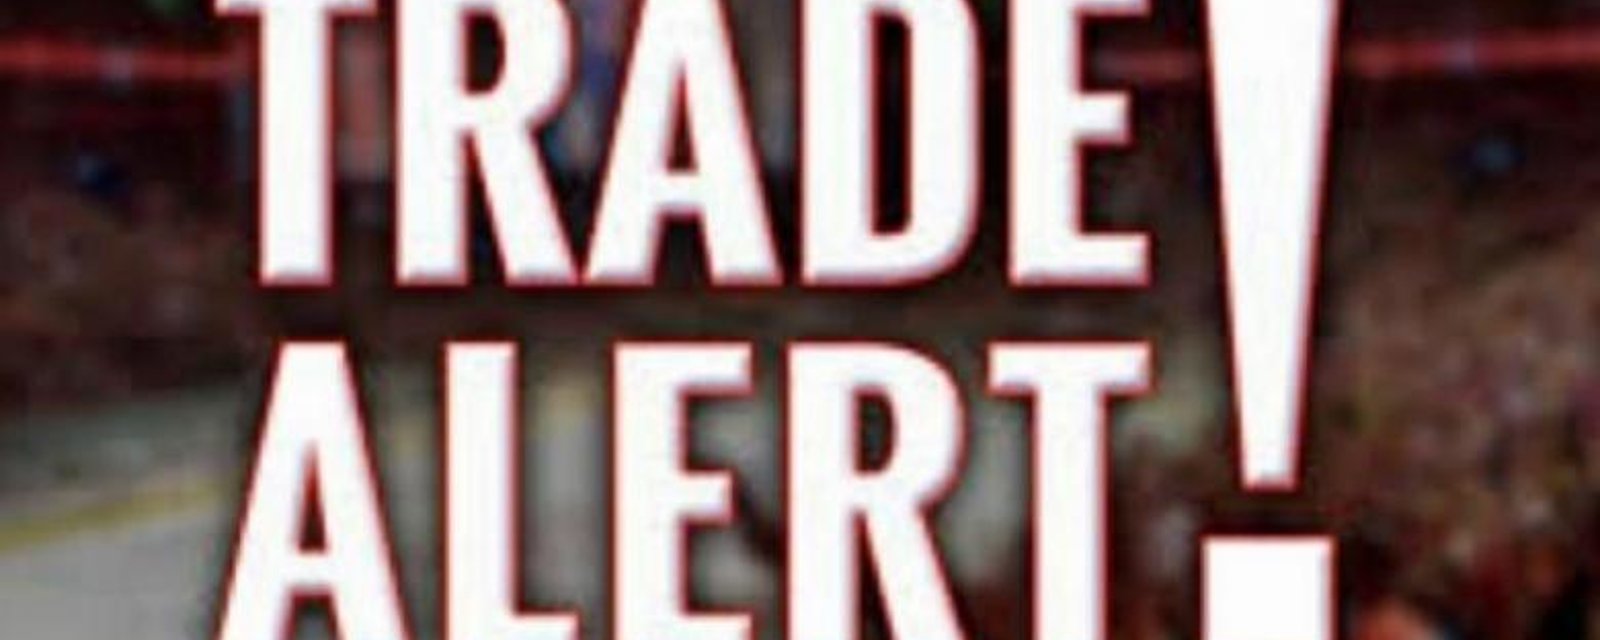 Breaking: NHL team announces minor trade.